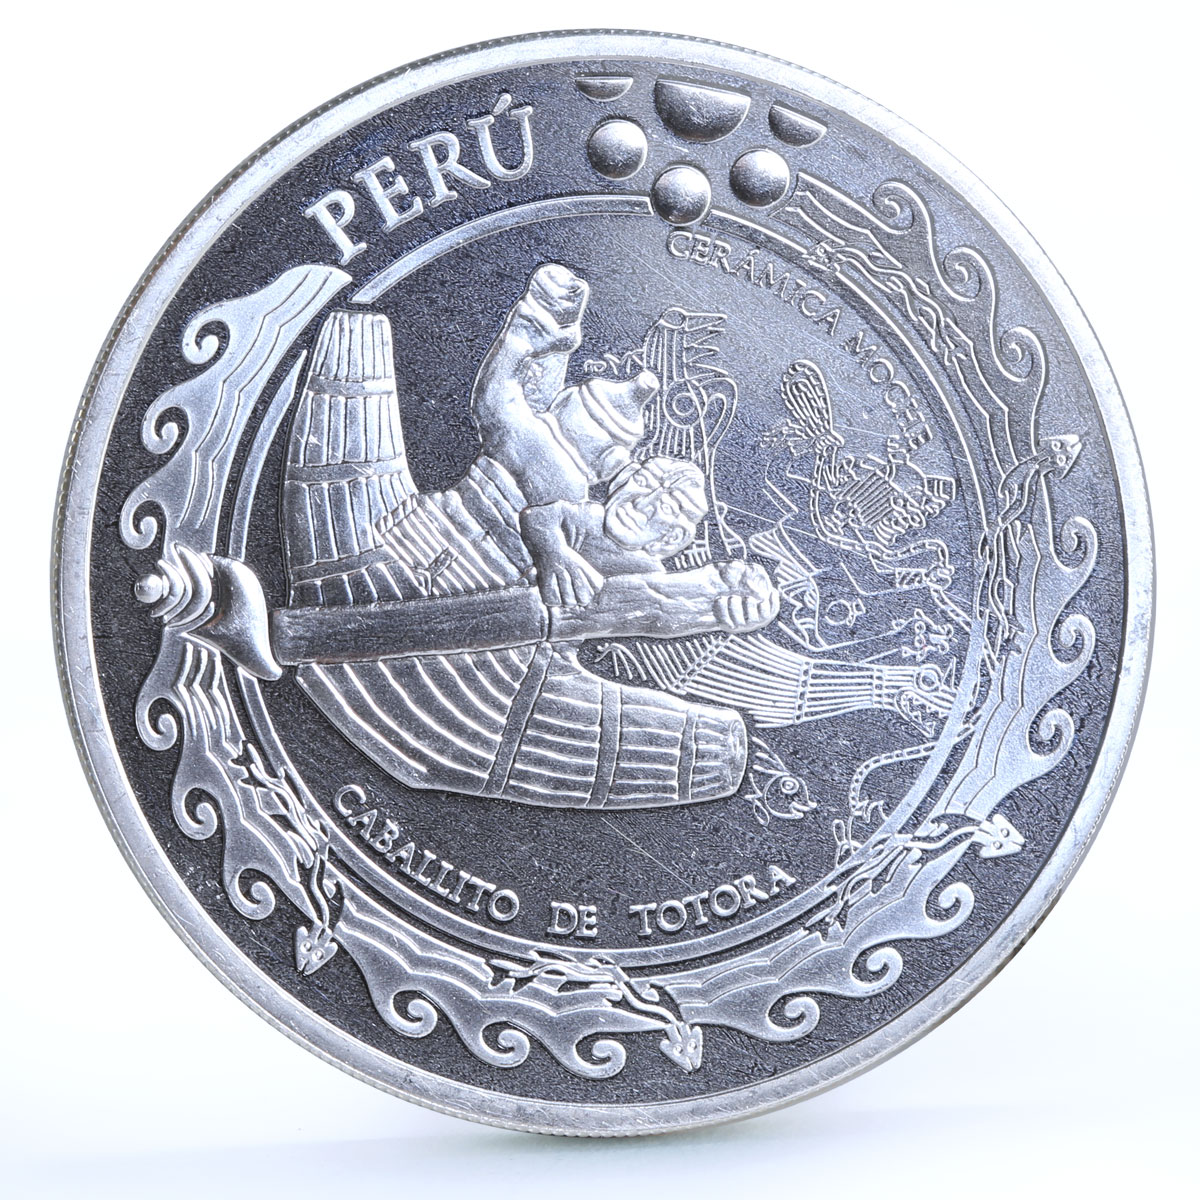 Peru 1 sol Indians Ship Boat Sailing Moche Ceramic Crafts proof silver coin 2002